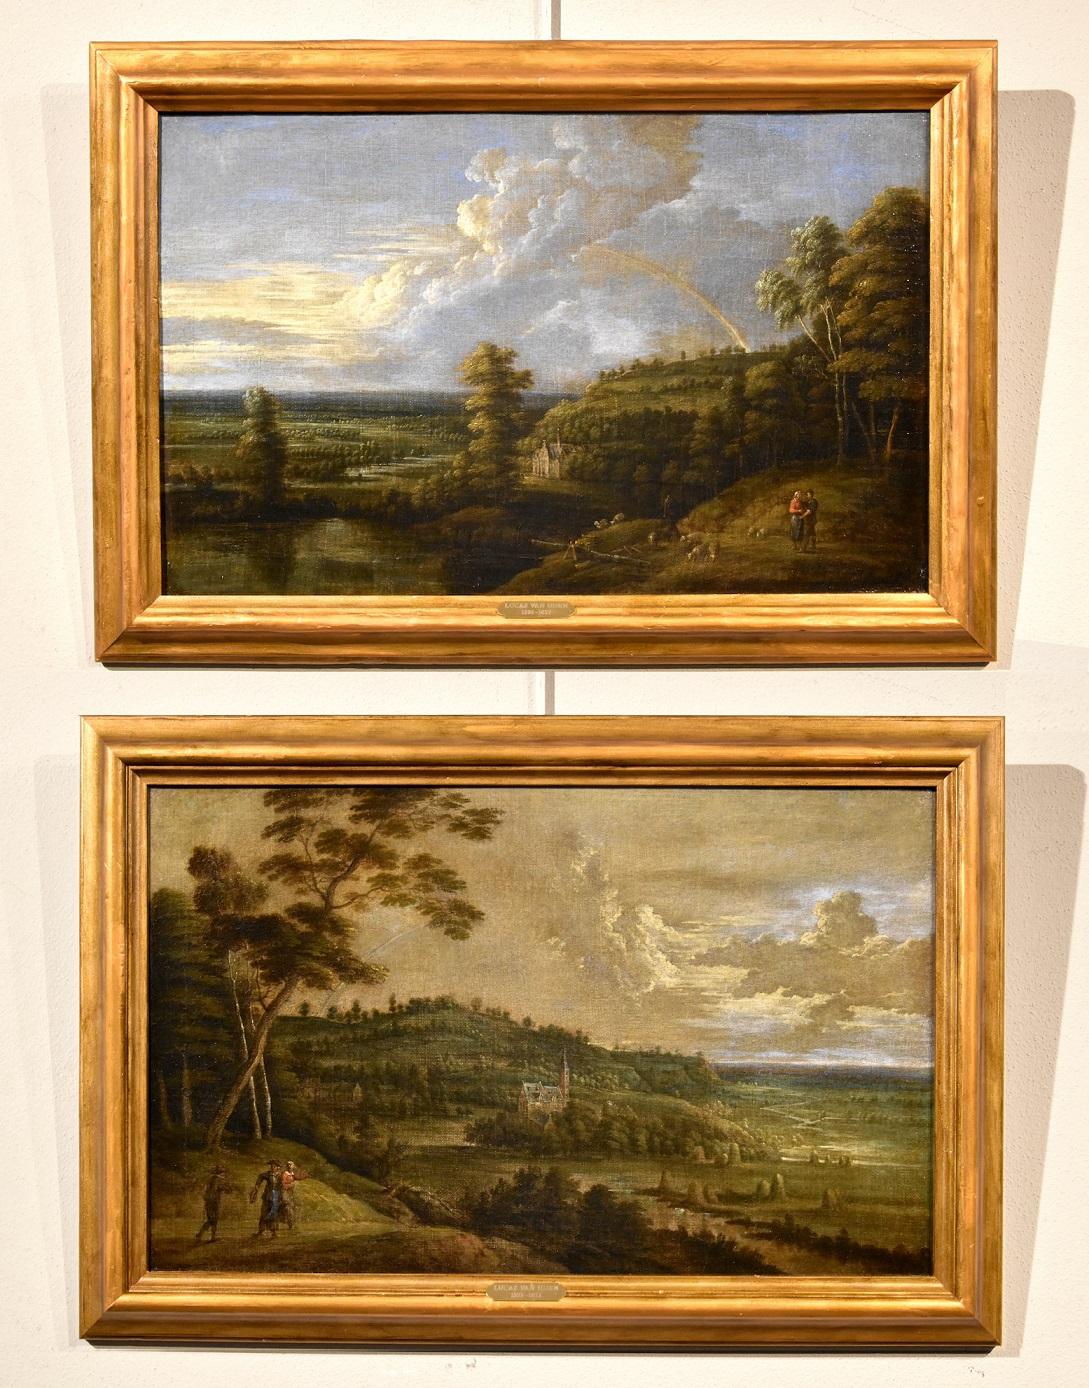 Lucas Van Uden (Antwerp 1595 - Antwerp 1672) Landscape Painting - Van Uden Landscapes Paint Oil on canvas Old master 17th Century Flemish Wood Art